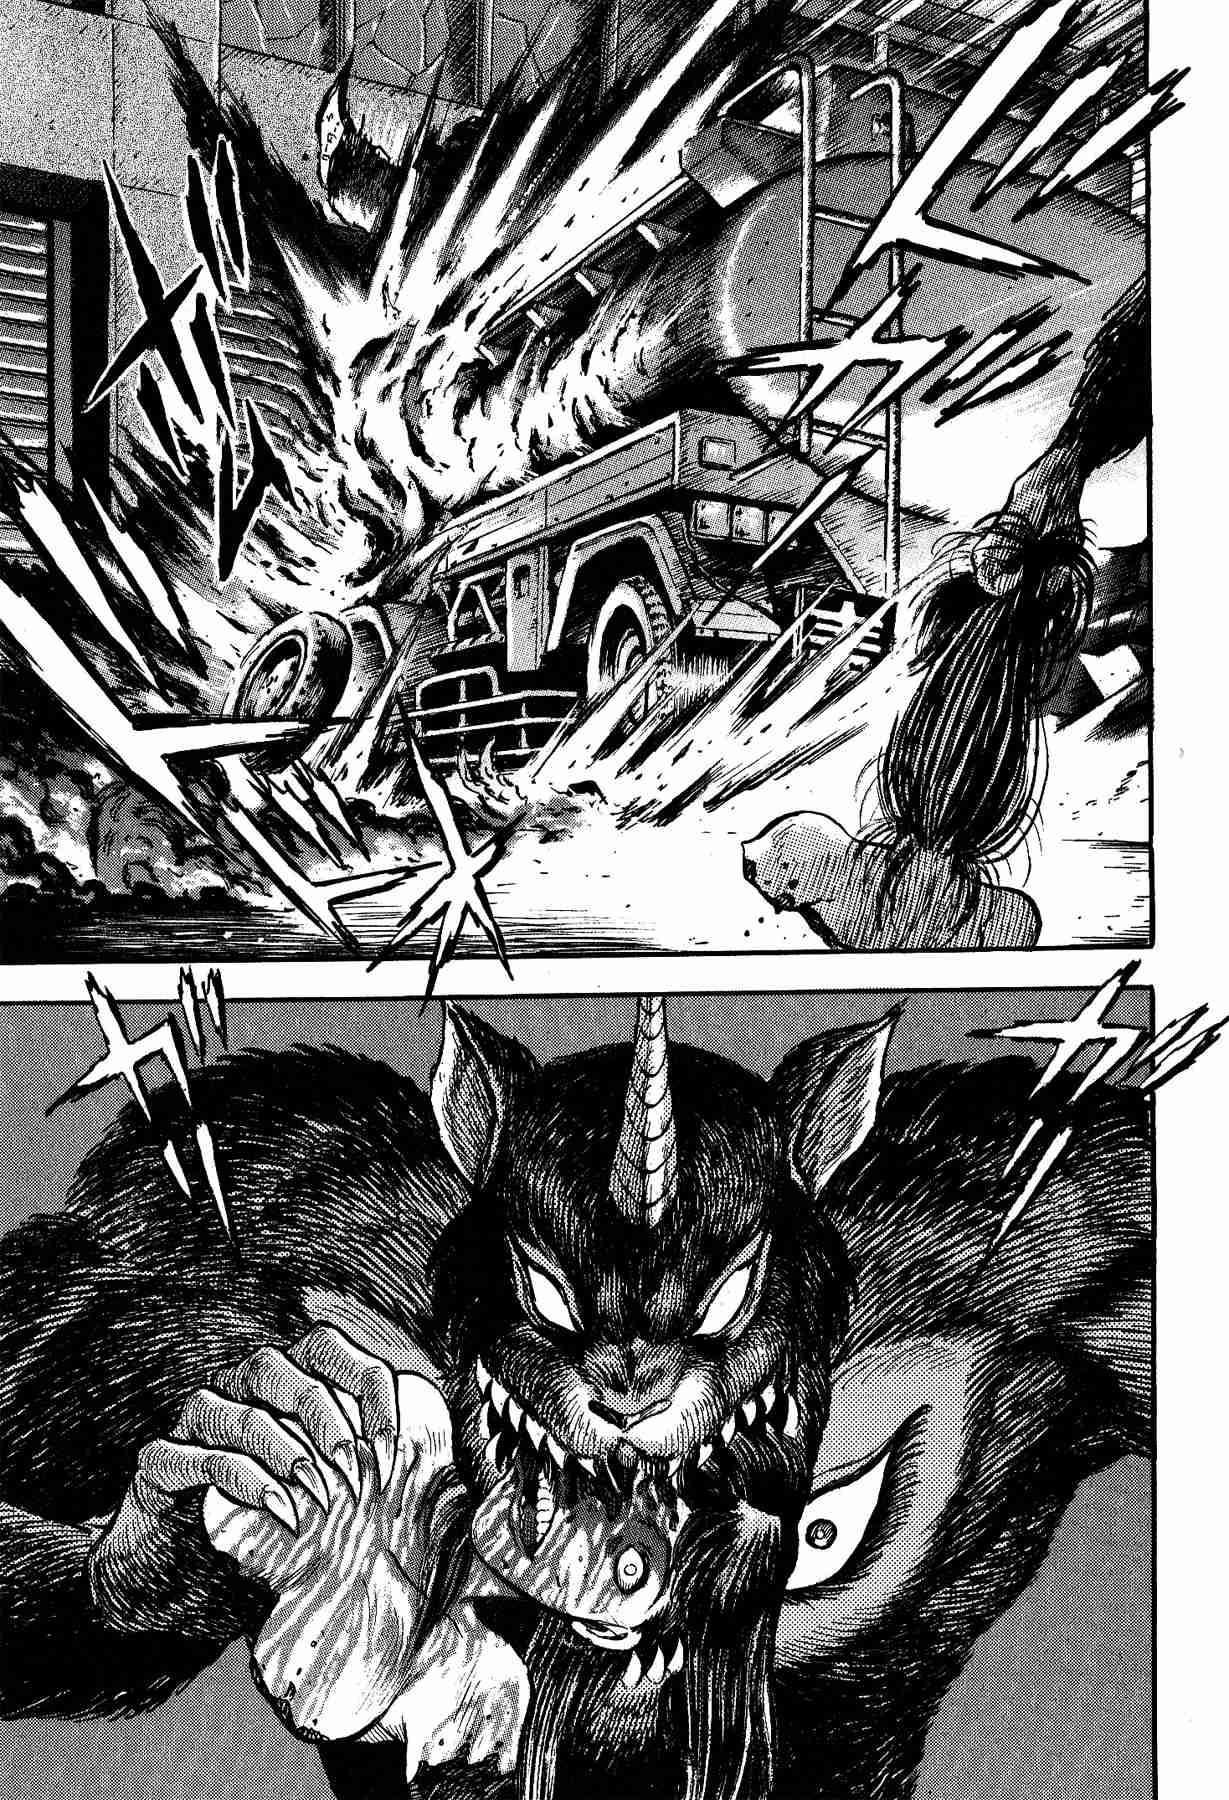 Gekiman! Devilman Chapter Vol. 2 Ch. 14 Geruma's Intrusion